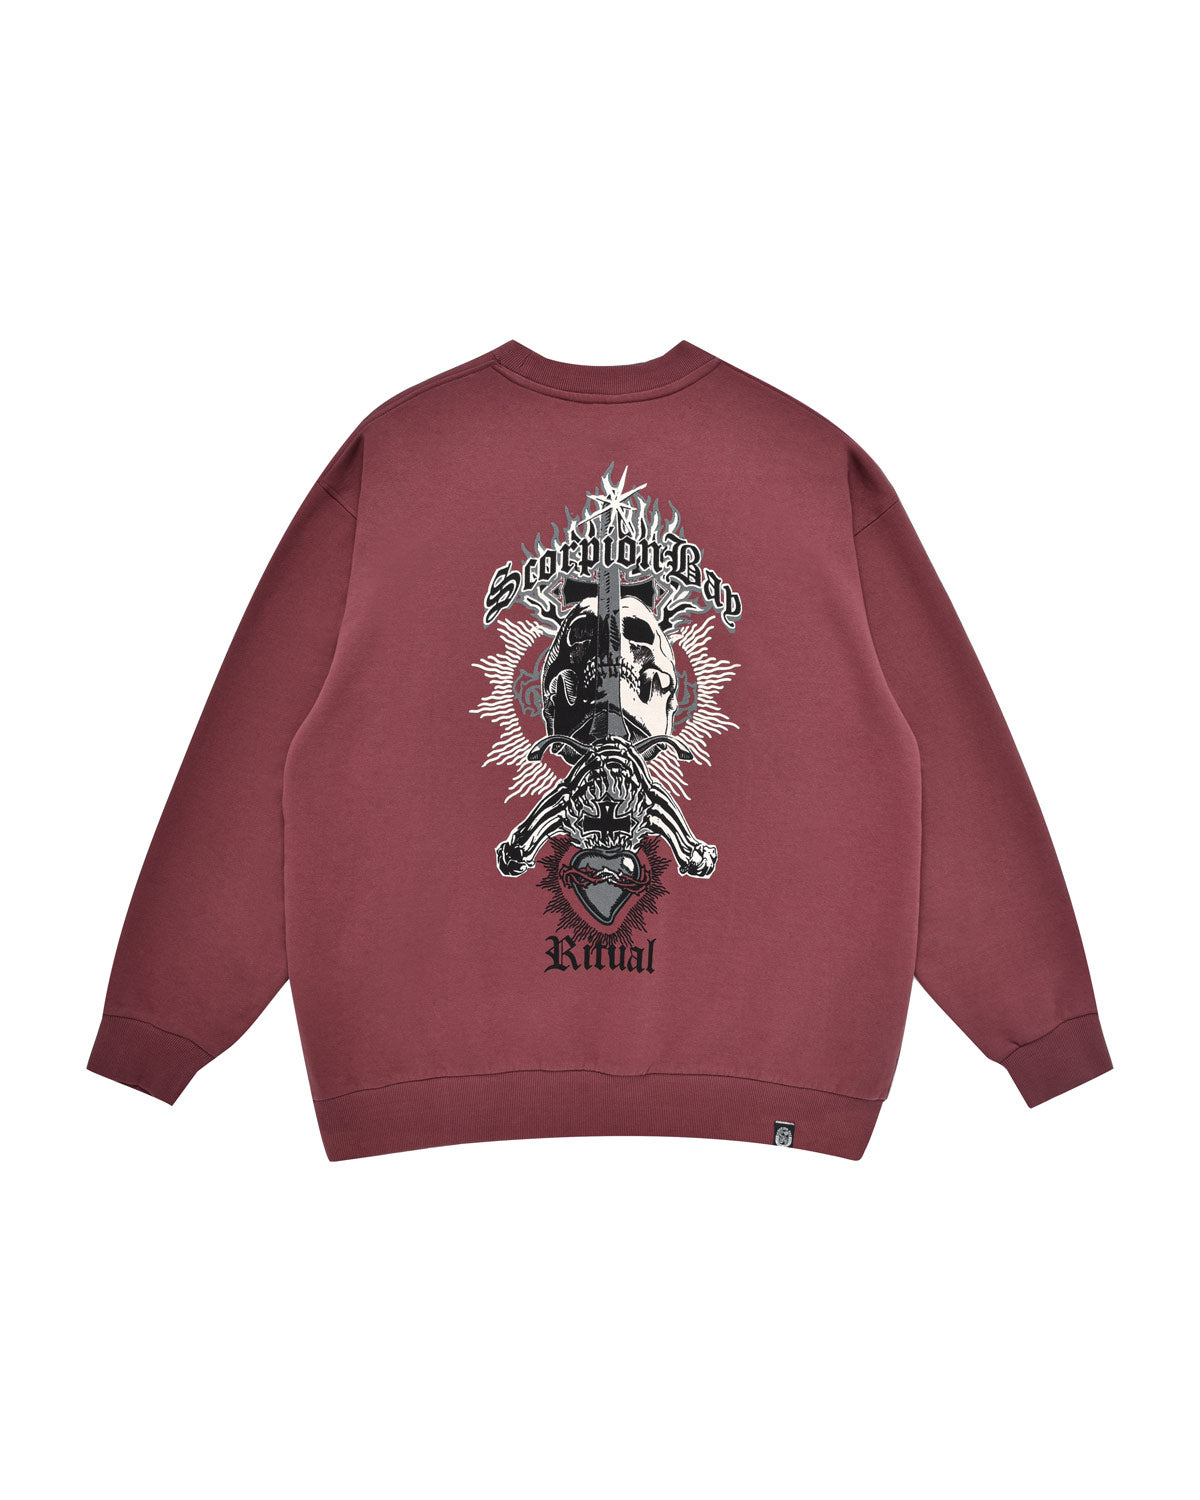 Man | Ritual Og "Skull&amp;Sword" brick-colored sweatshirt in 100% cotton